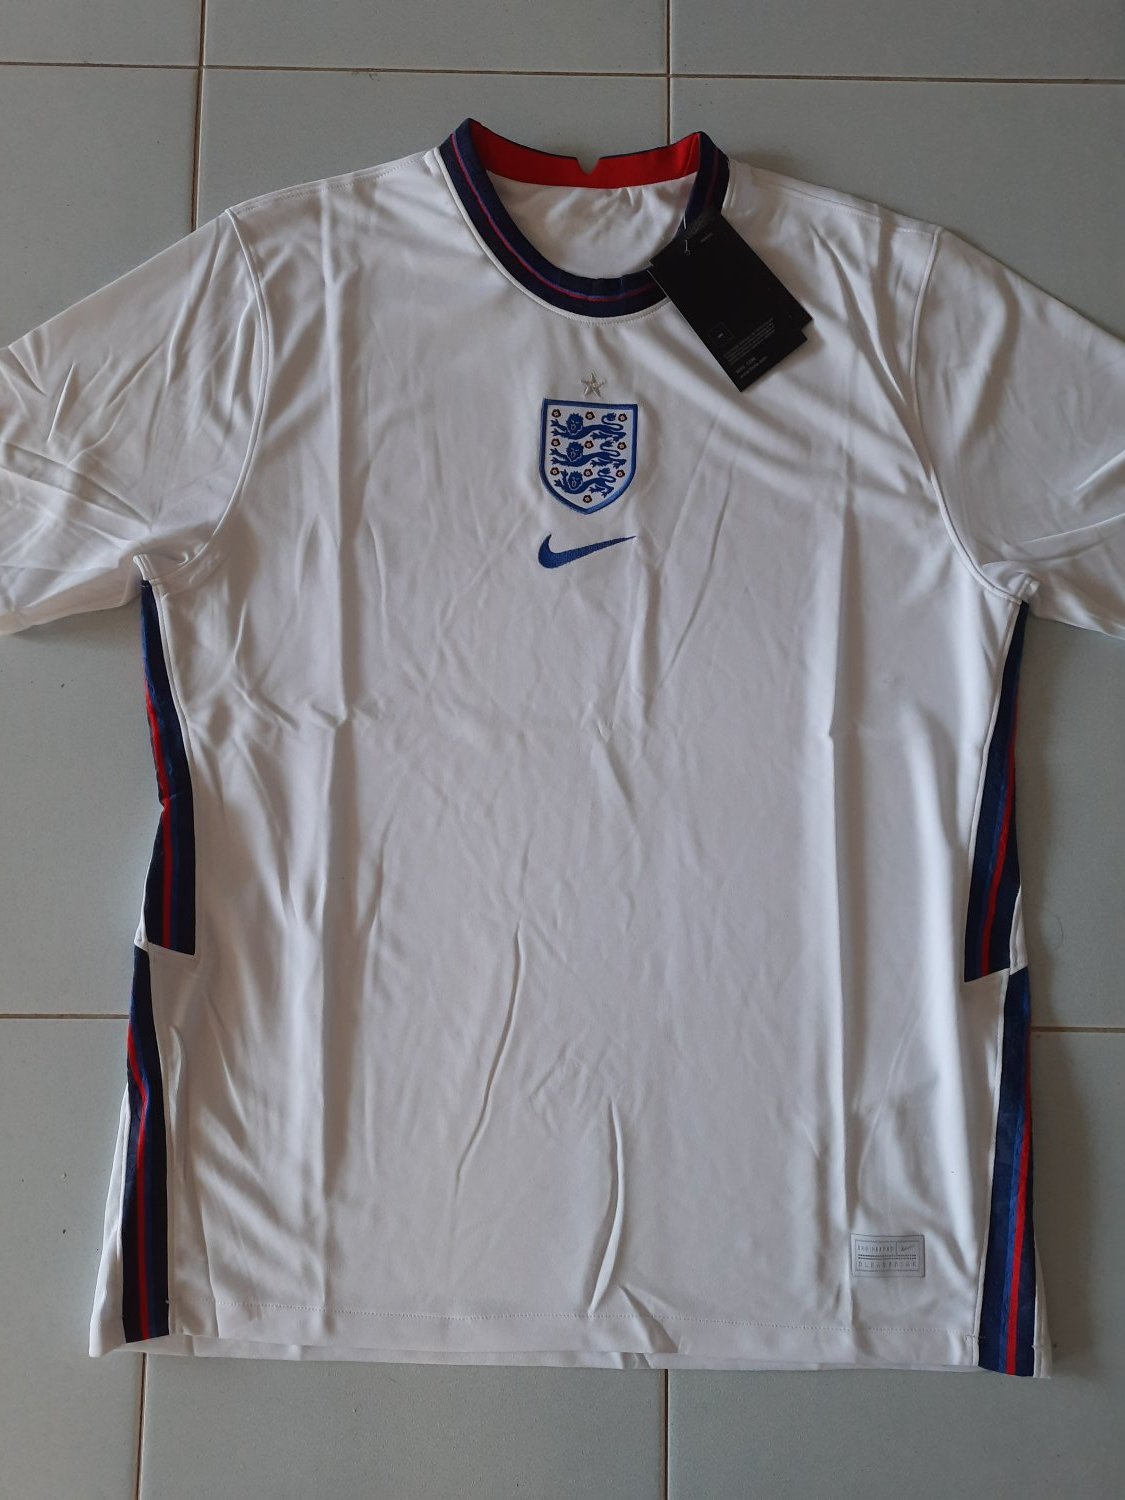 England Football Jersey - Nike Football Kits For Teams Jersey On Sale ...